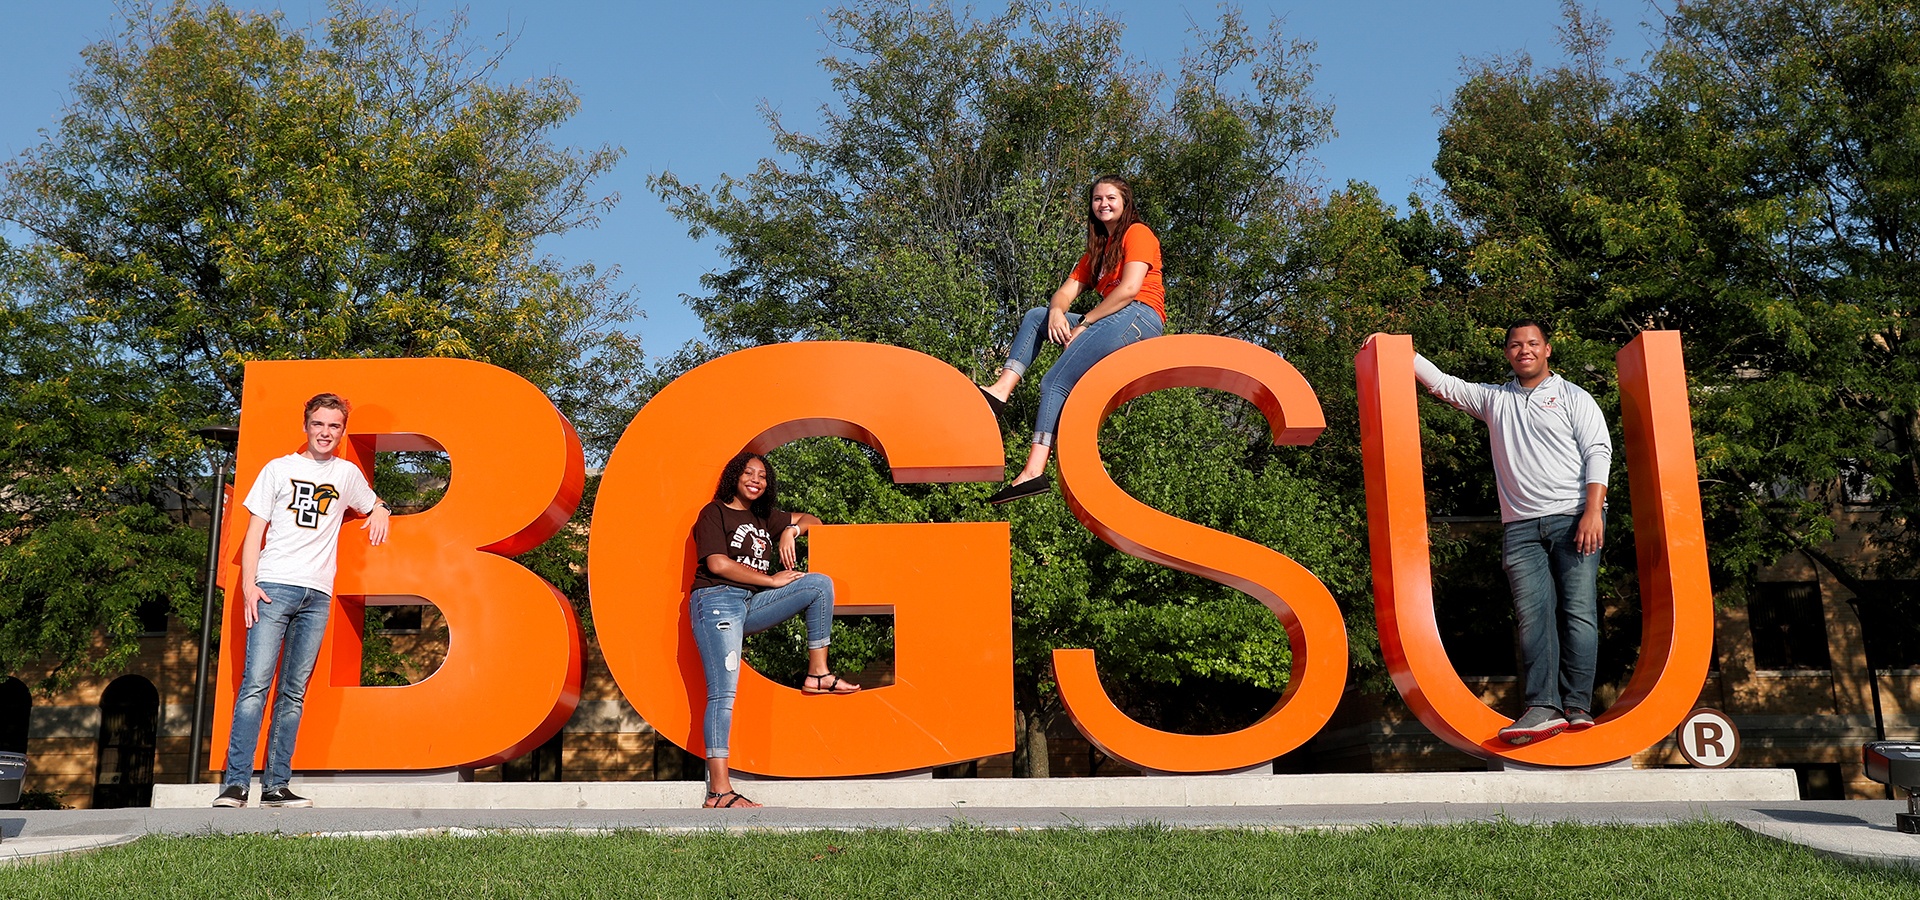 BGSU-letters-students-0262